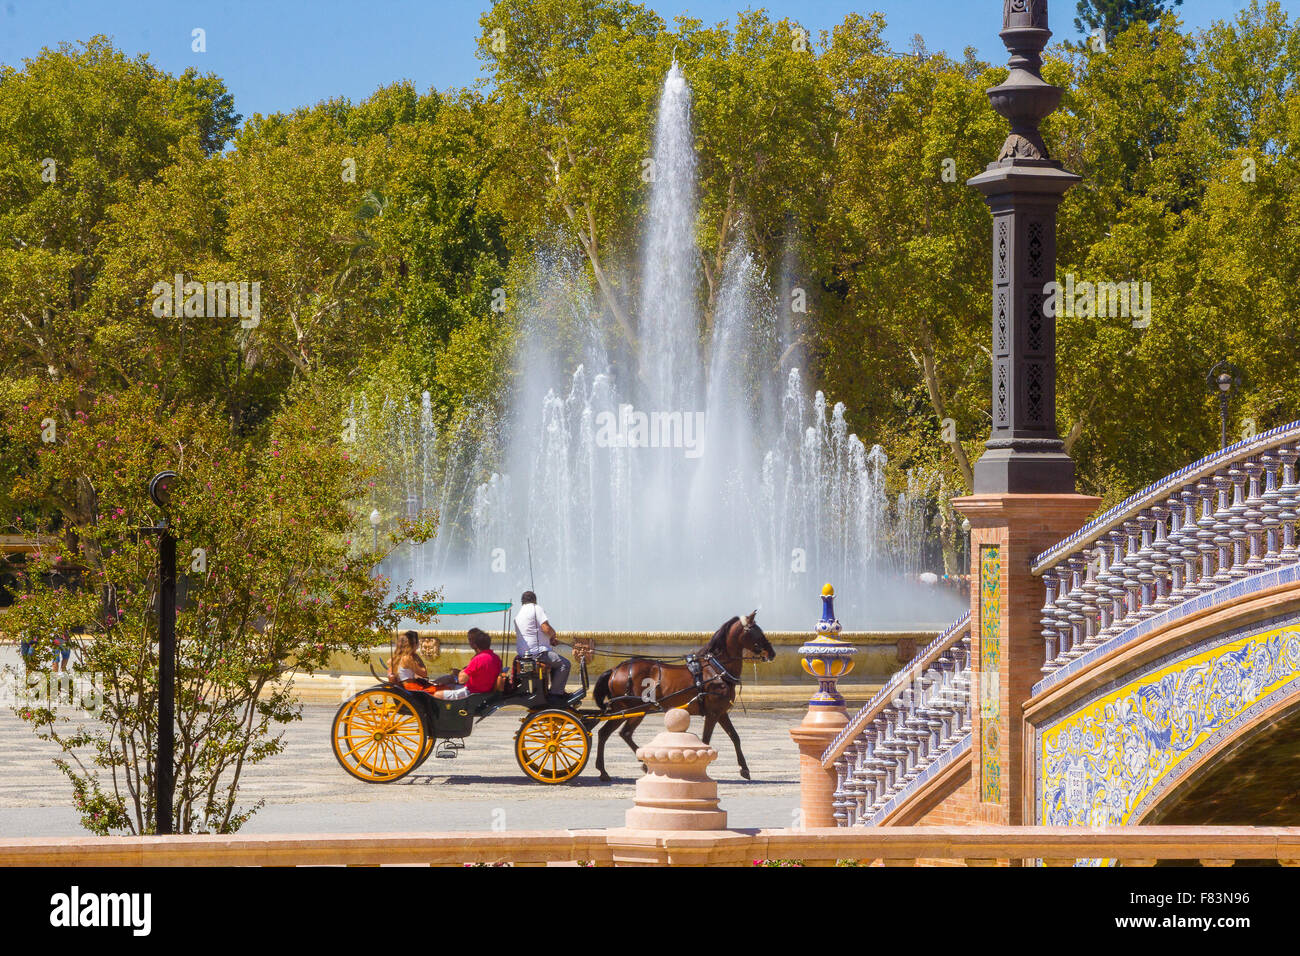 Springbrunnen in der berühmten Plaza de España in Sevilla, Spanien Stockfoto